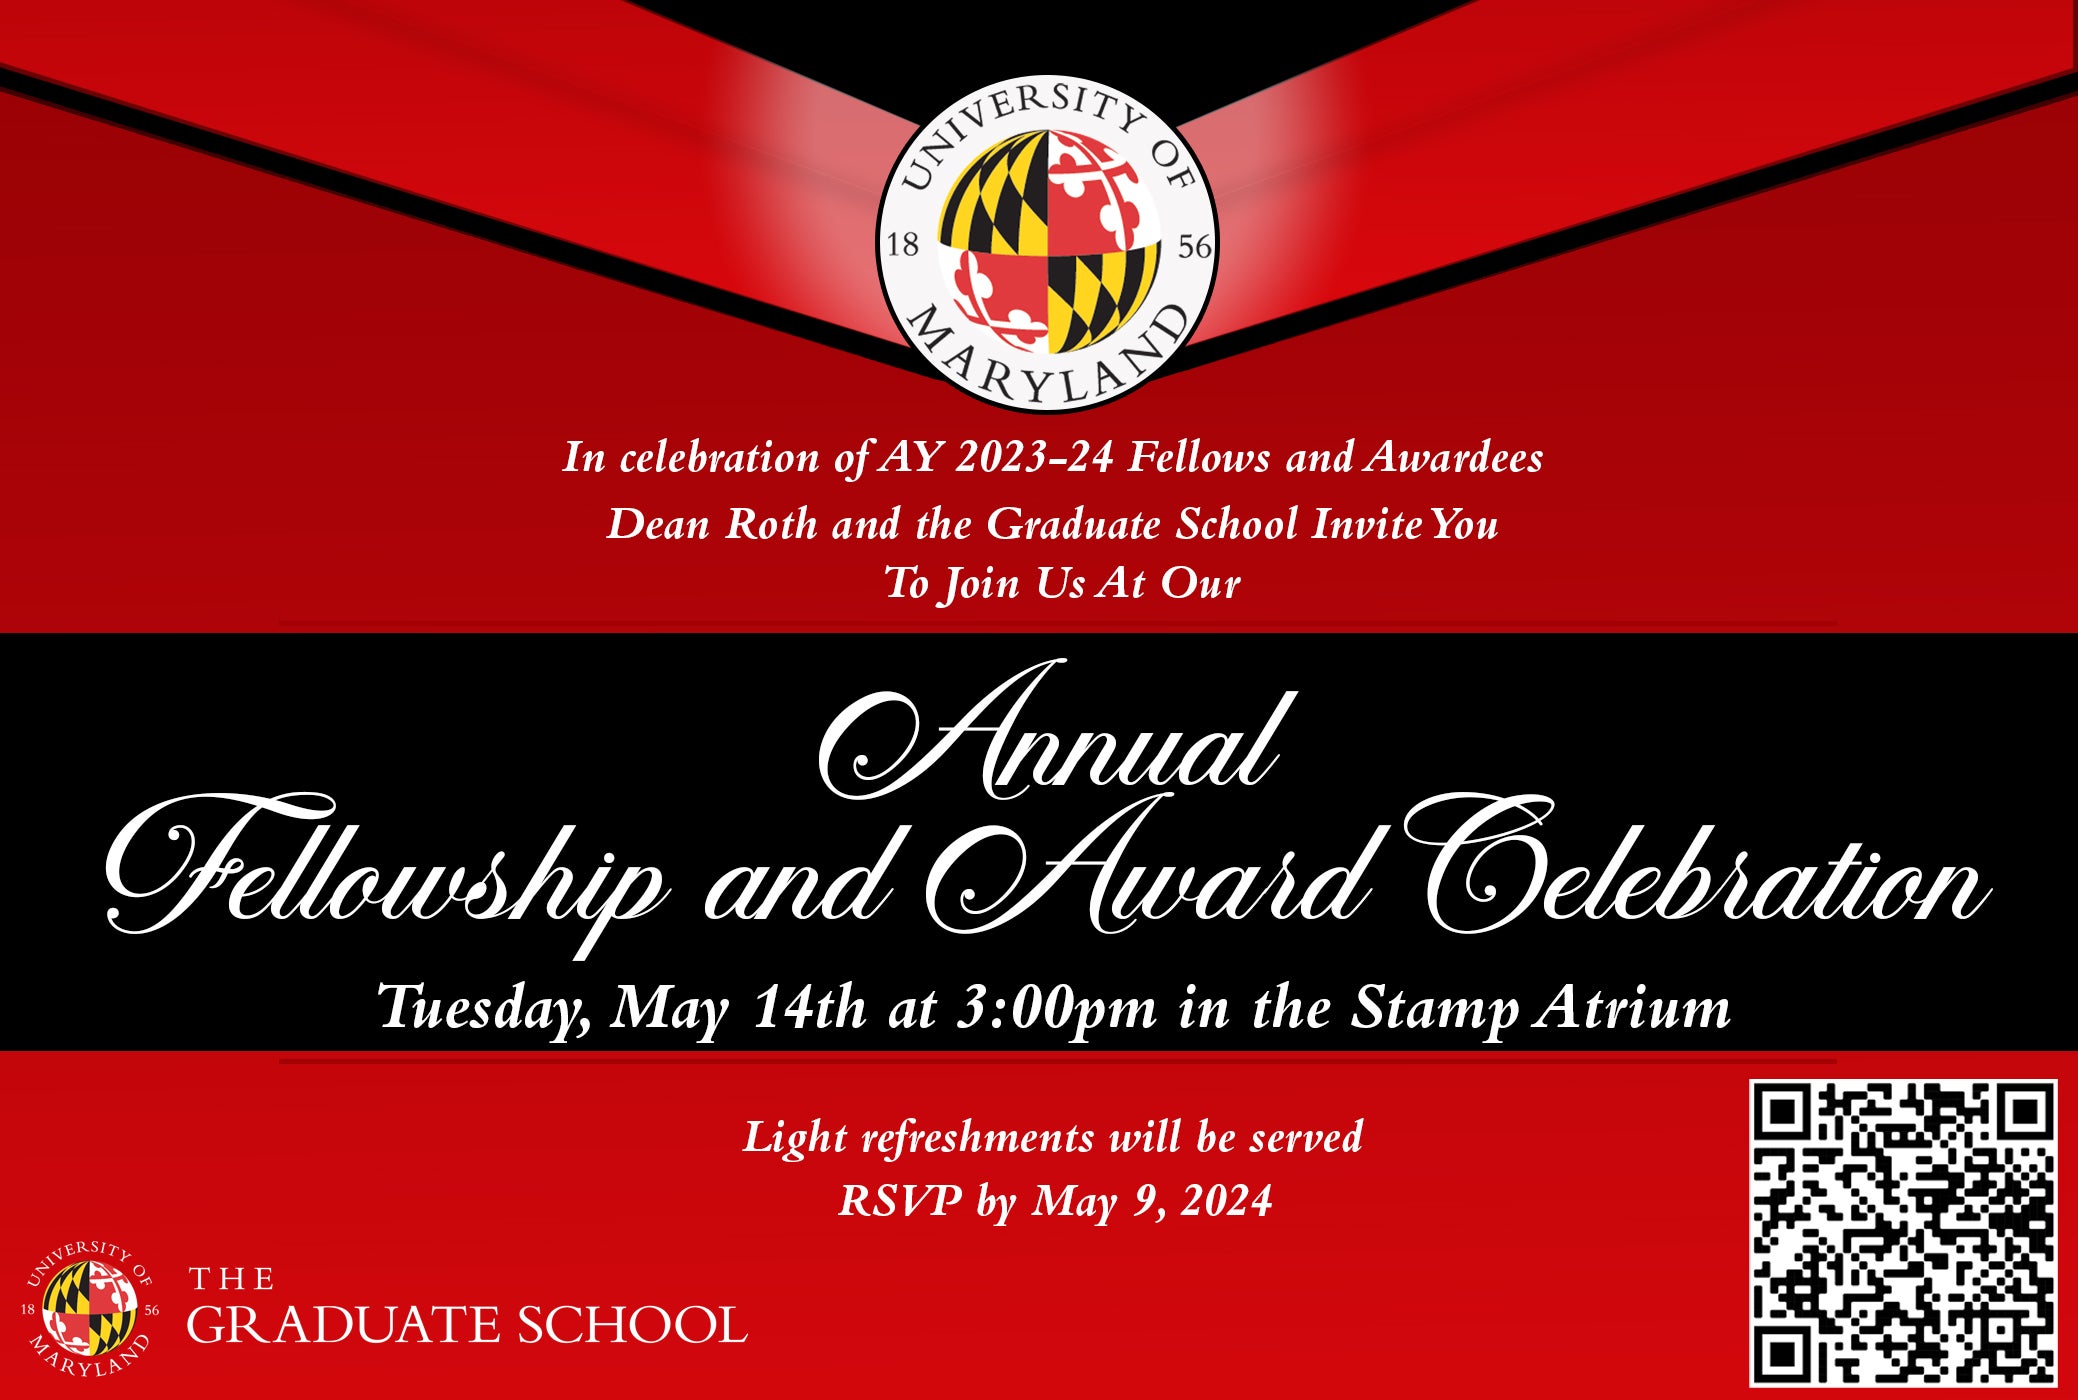 Fellowship and Award celebration invite